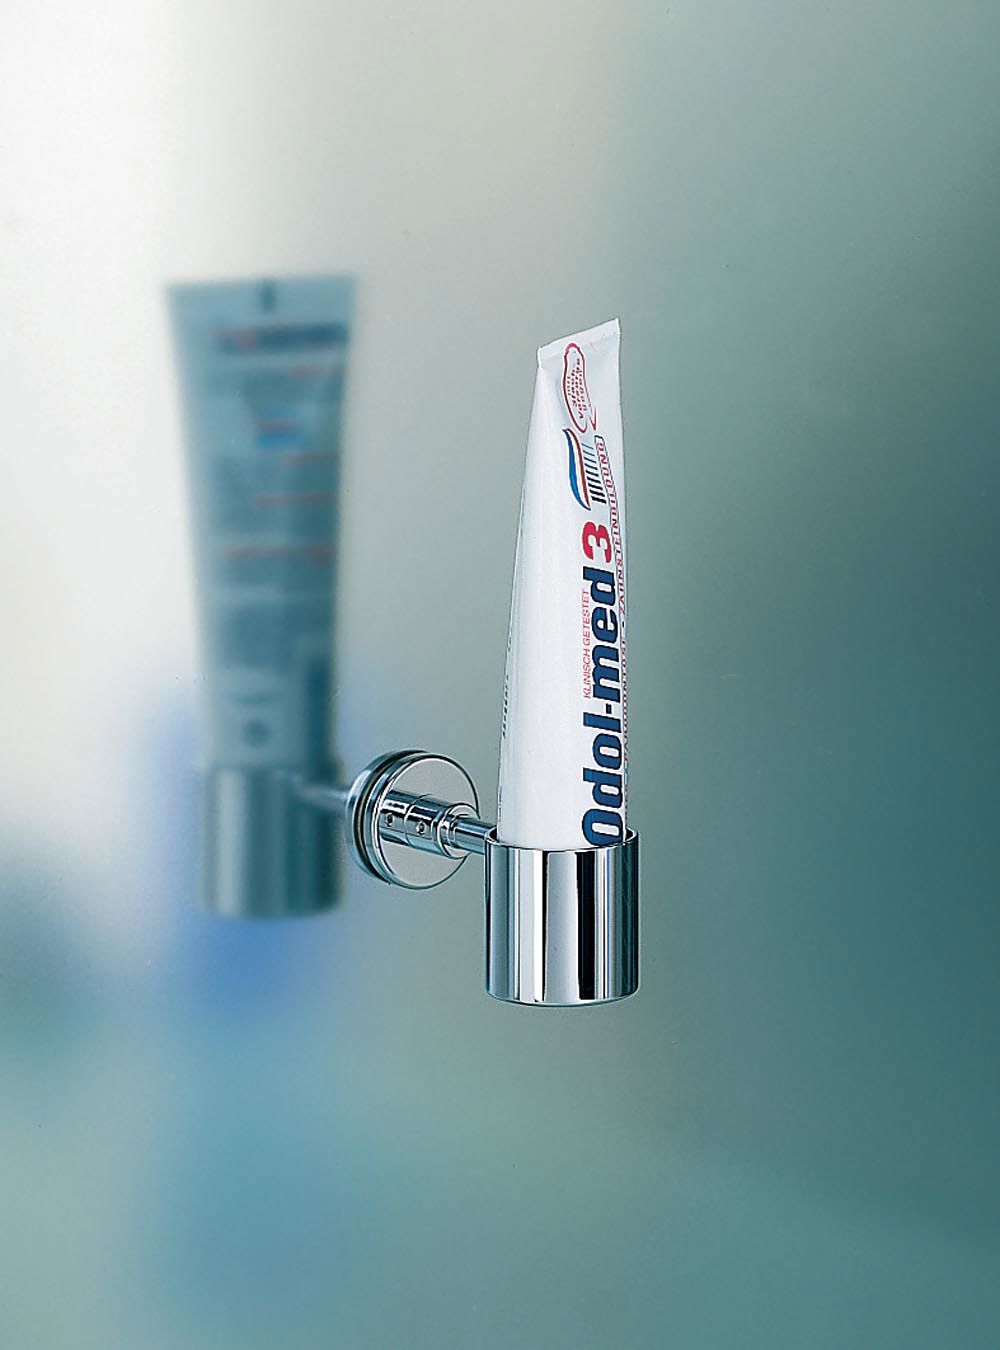 T16: Porte-tube dentifrice.